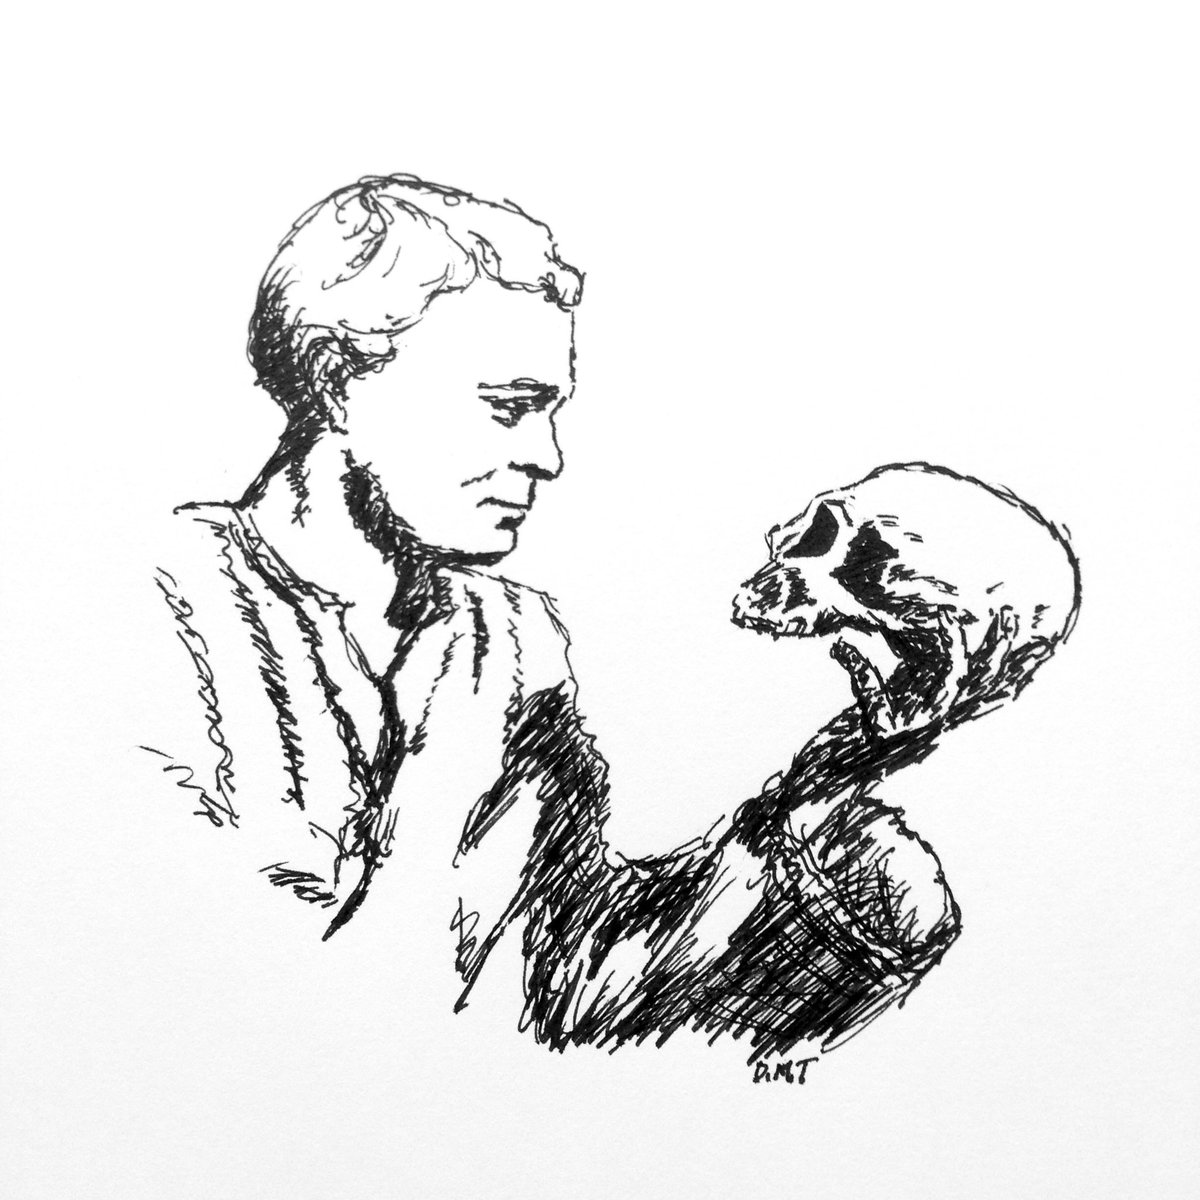 Hamlet Drawing at GetDrawings | Free download